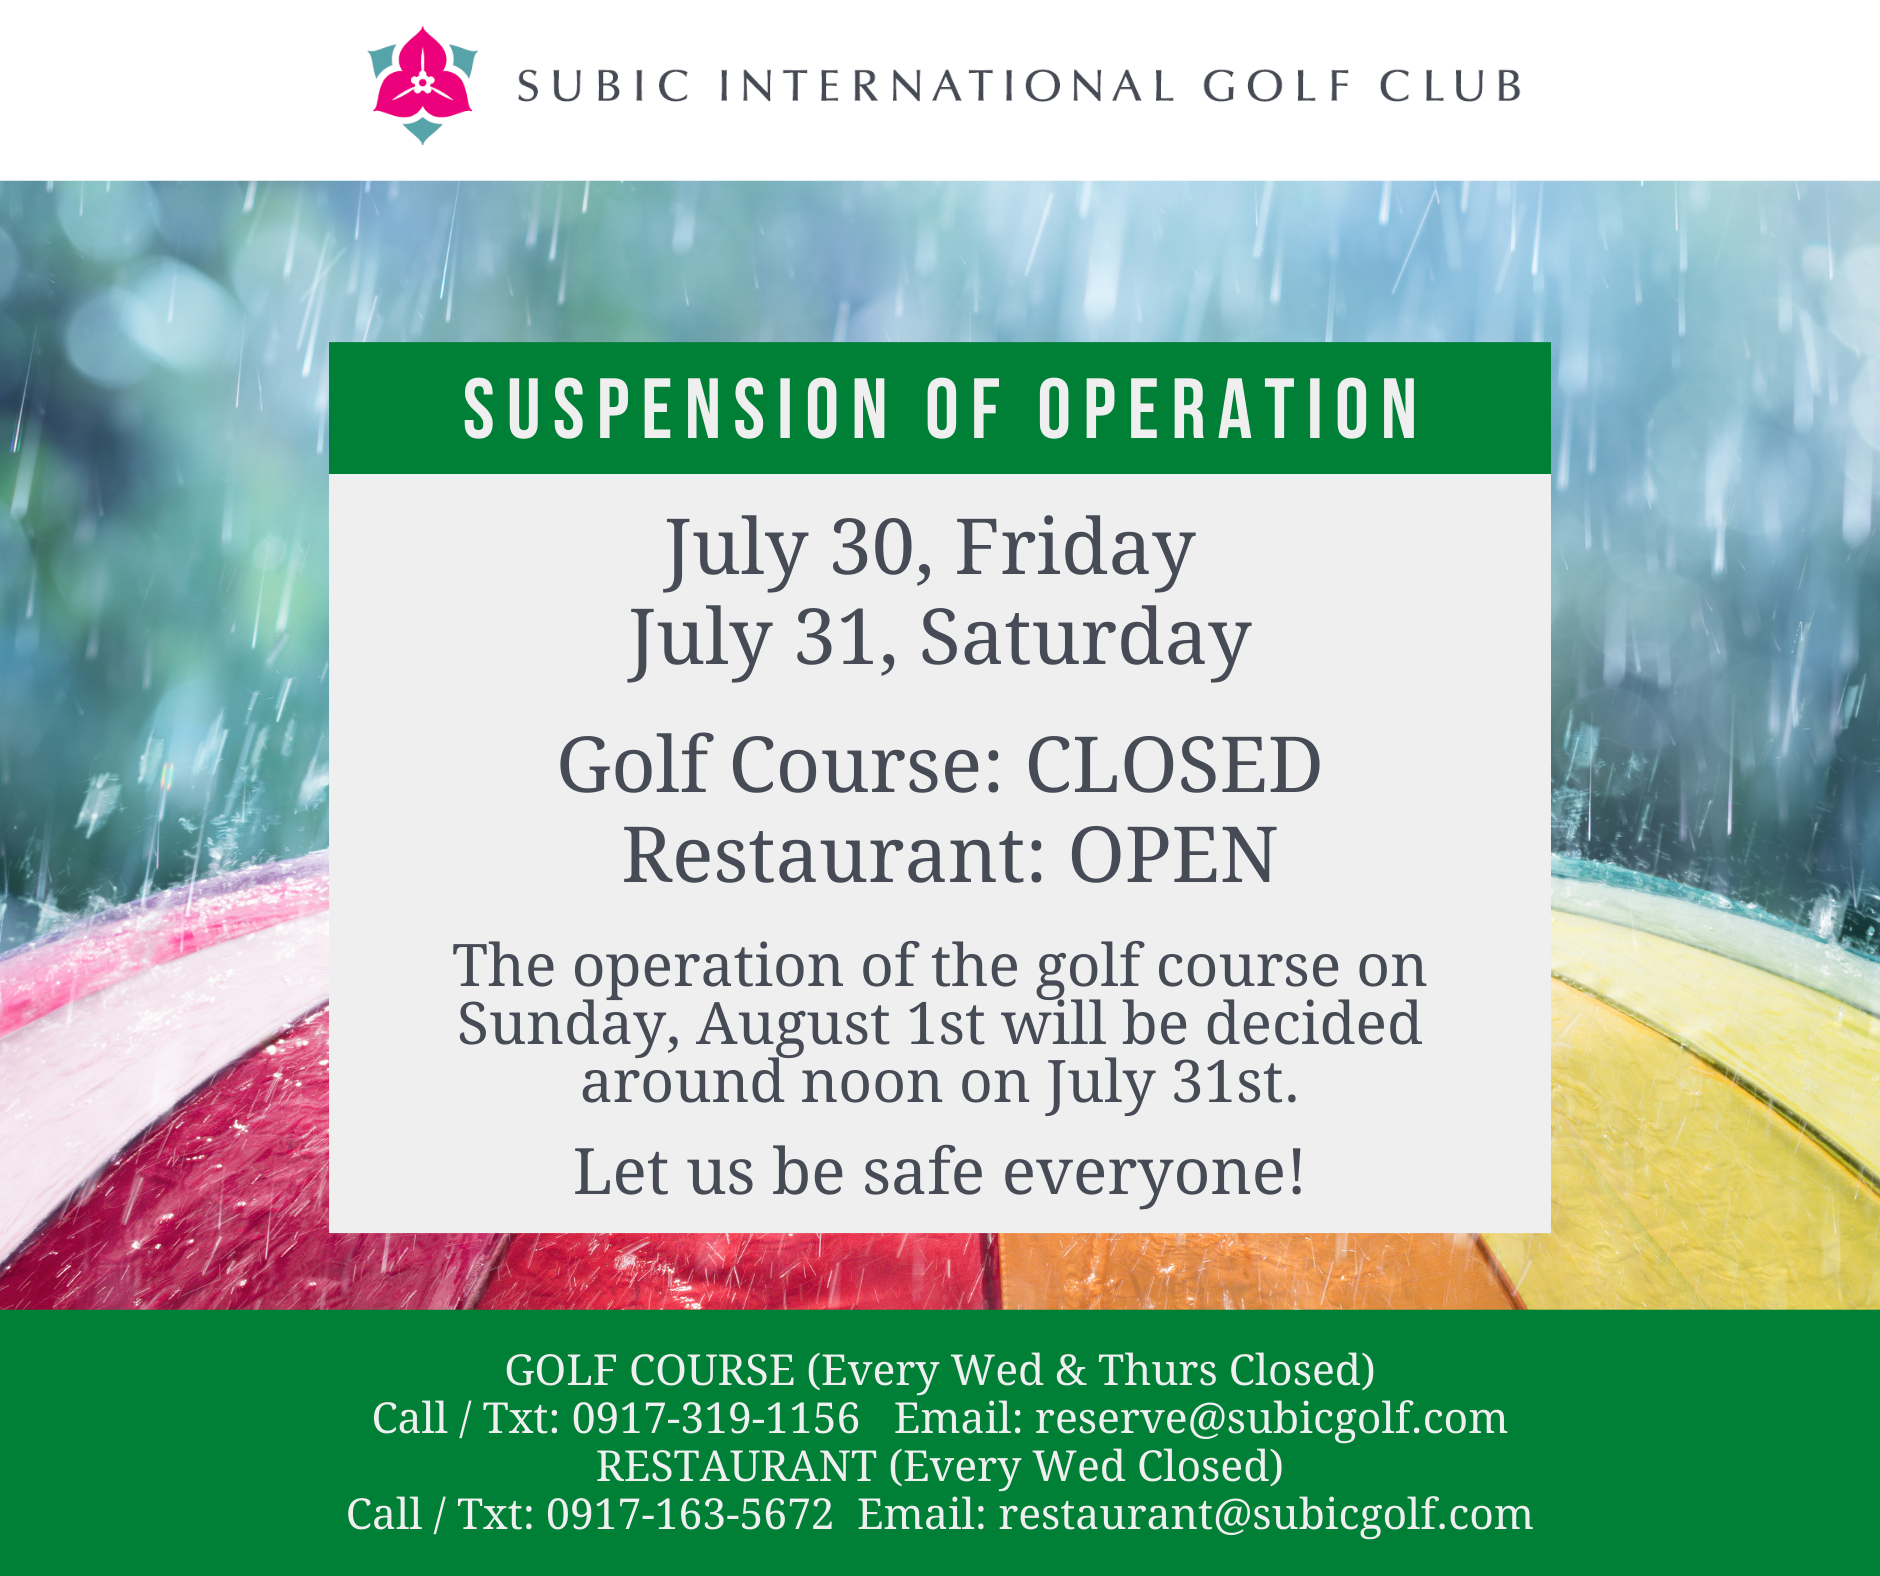 Suspension of Operation 7/30-7/31